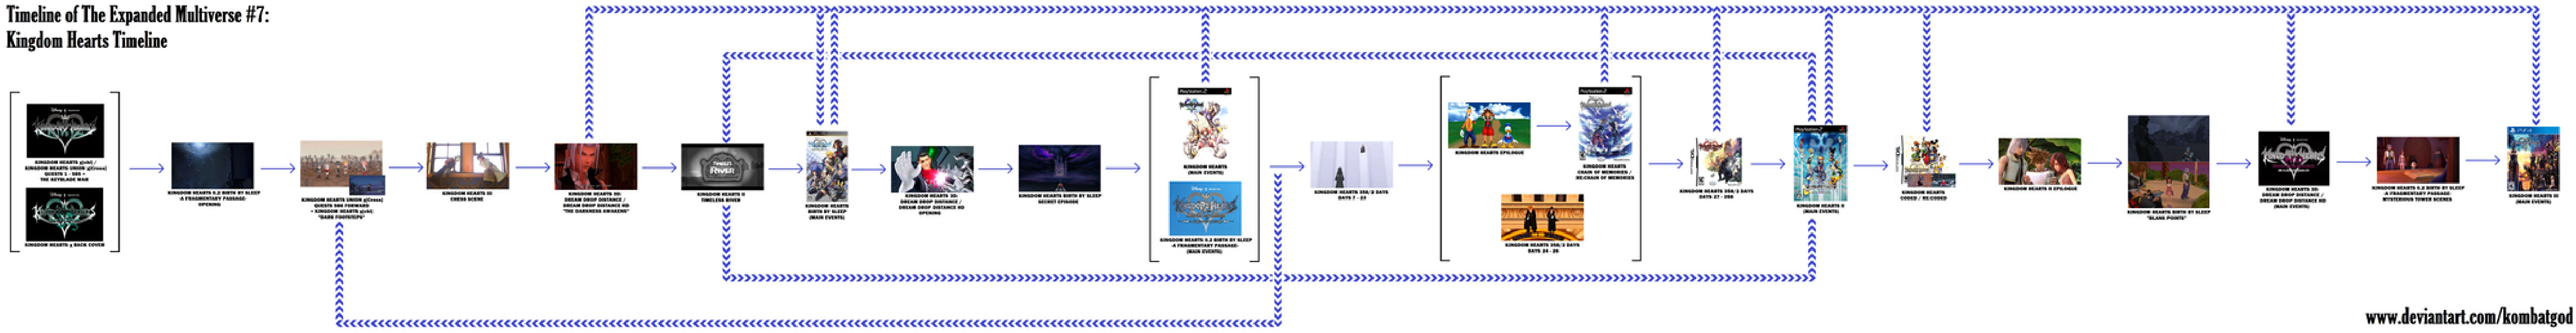 Kingdom Hearts and Kingdom Hearts 2: the story and timeline (so far) -  Polygon